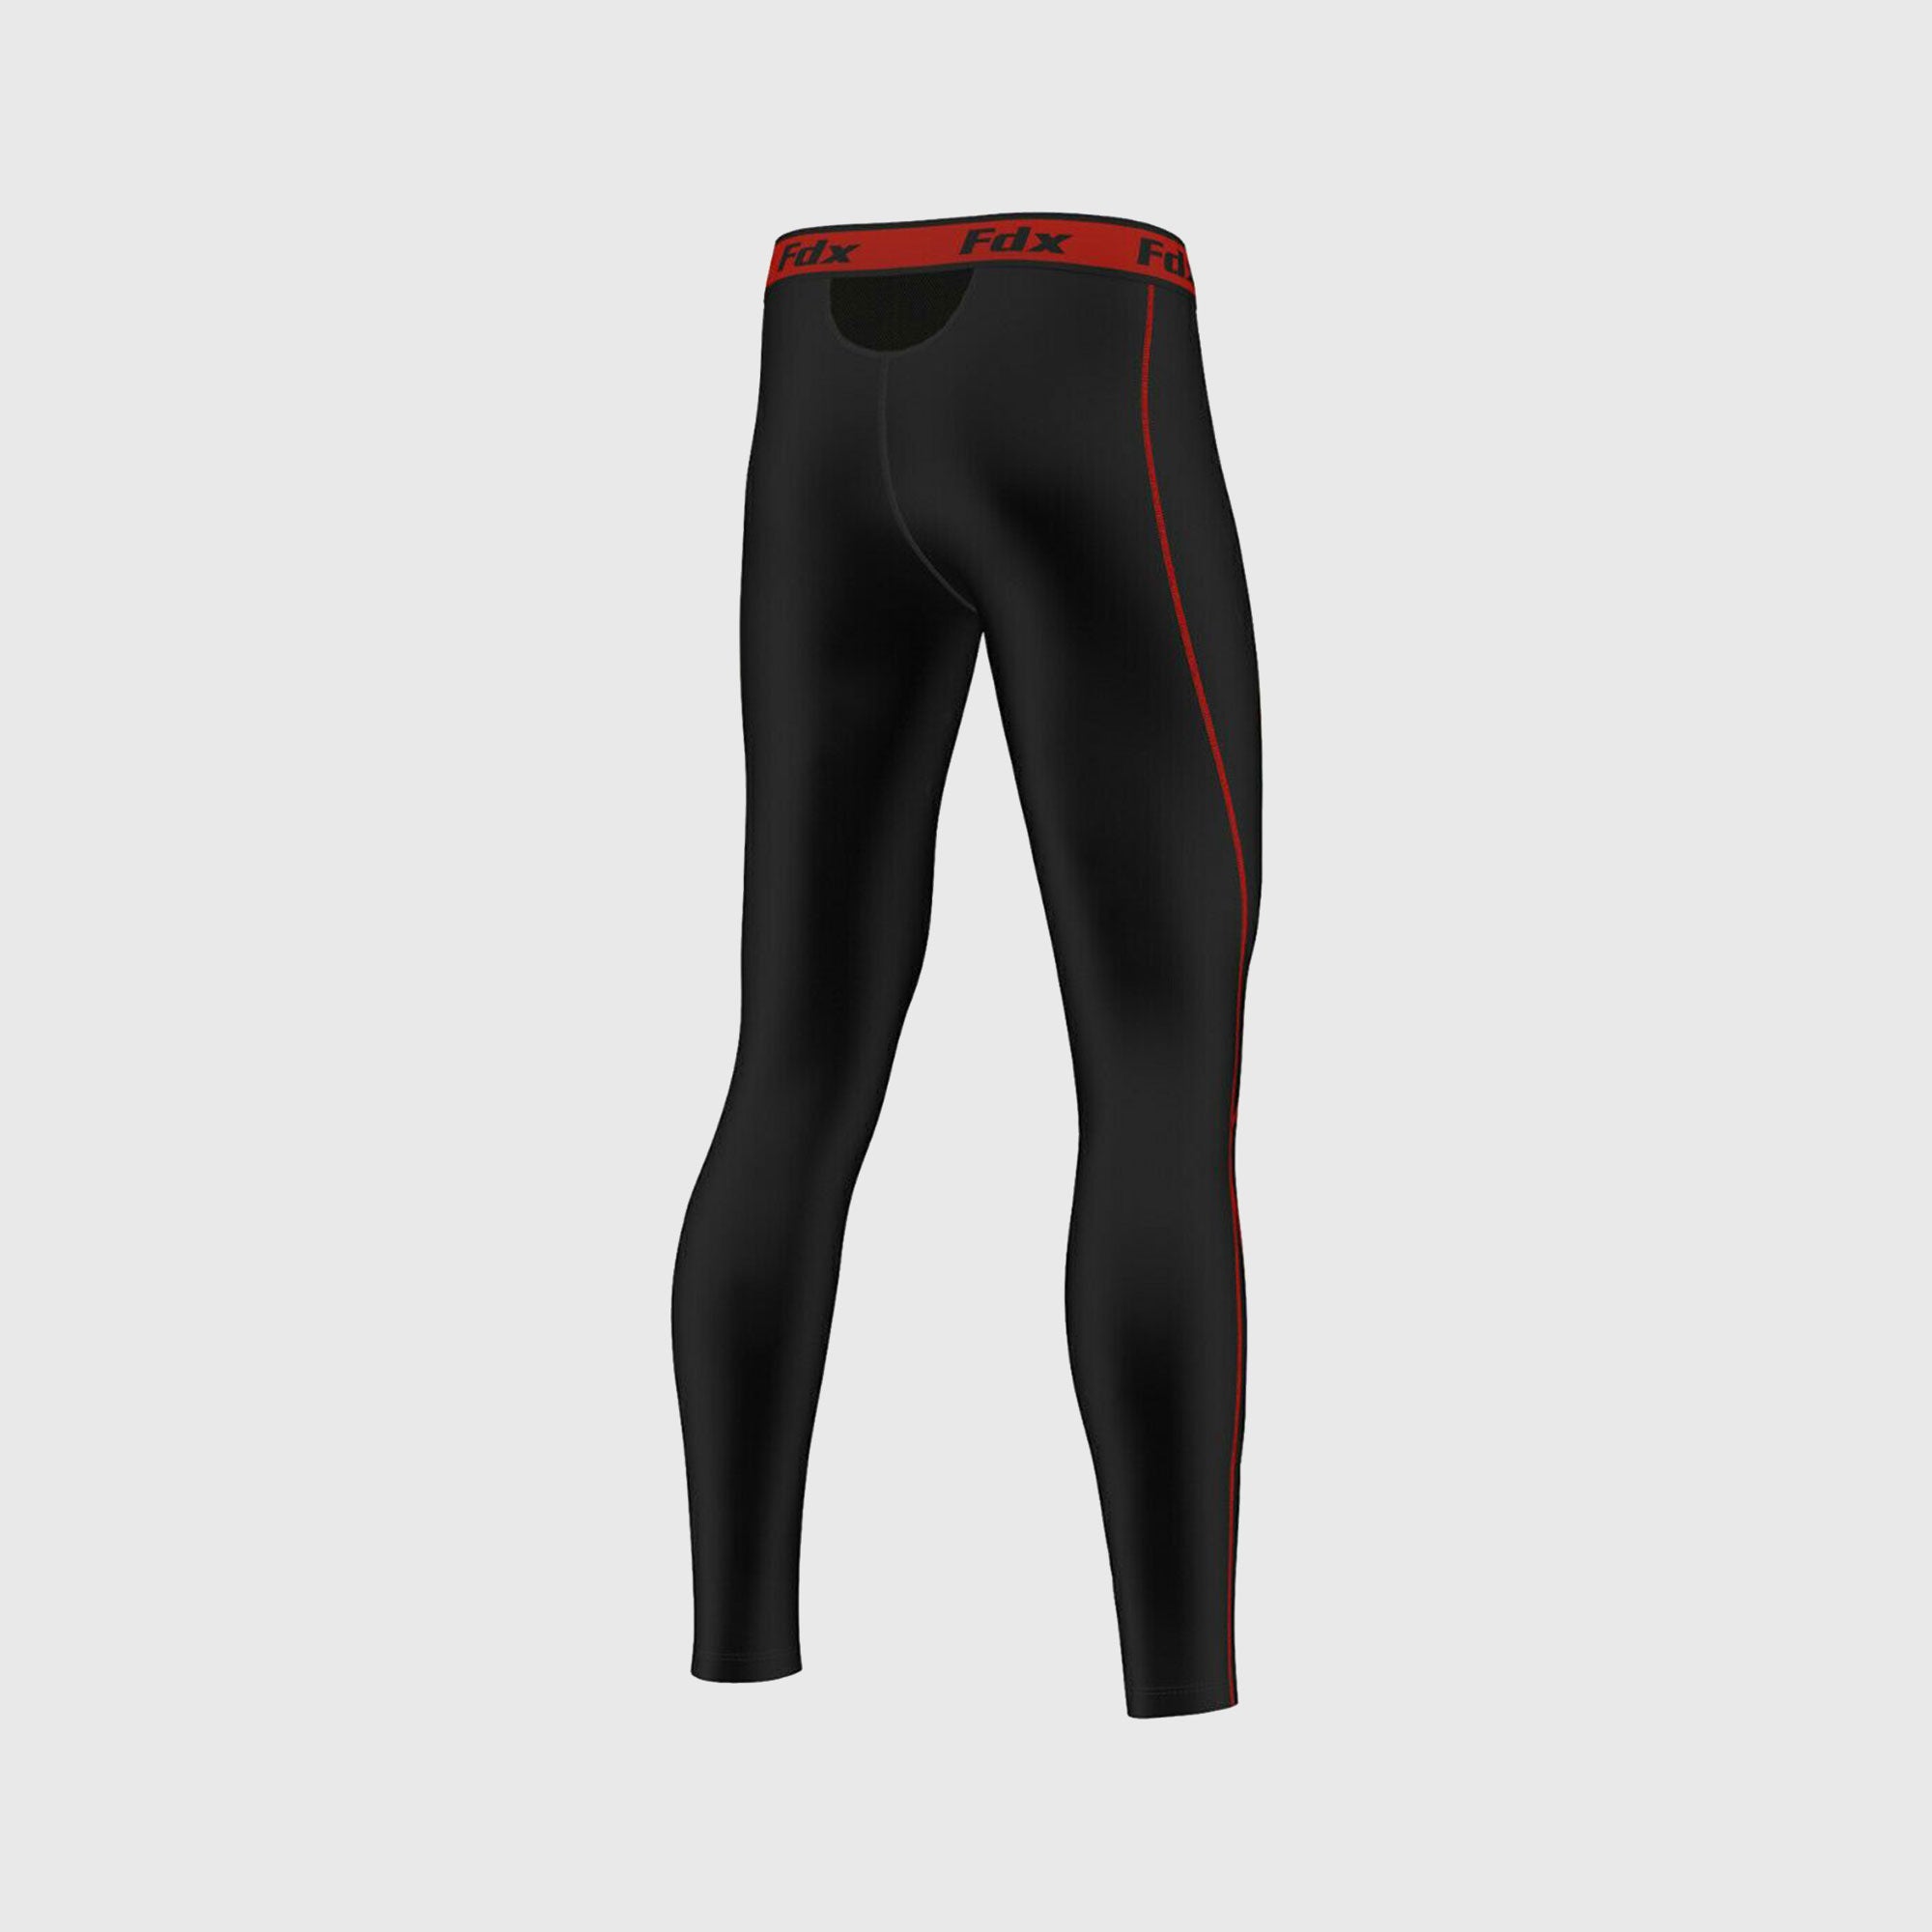 BlazeFit thermo leggings Size M/L Colour Black/Red